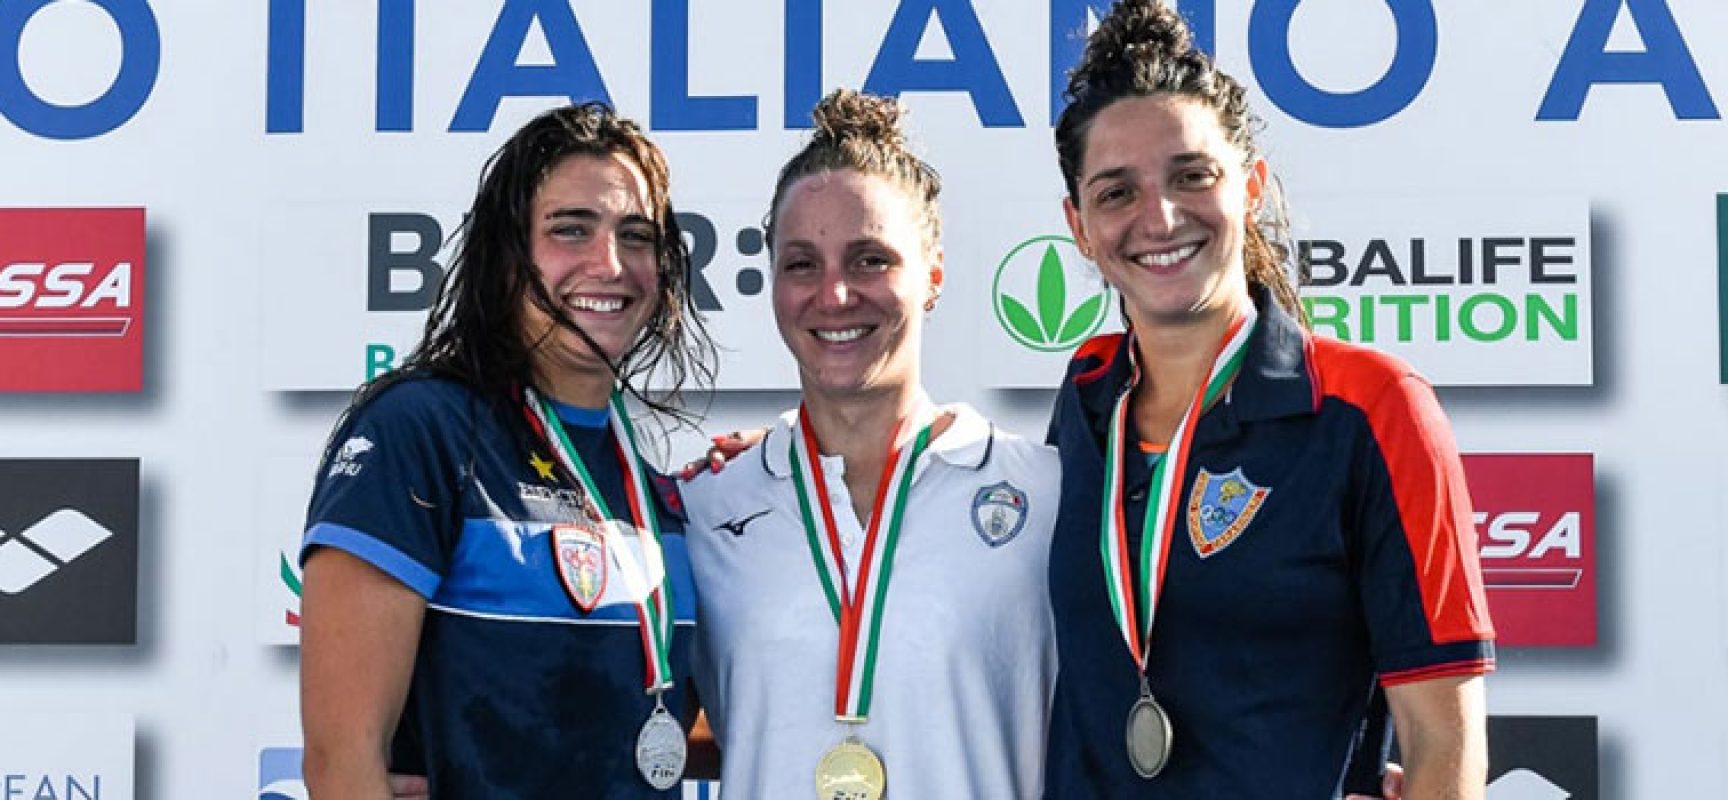 Elena Di Liddo: due bronzi ai campionati italiani assoluti